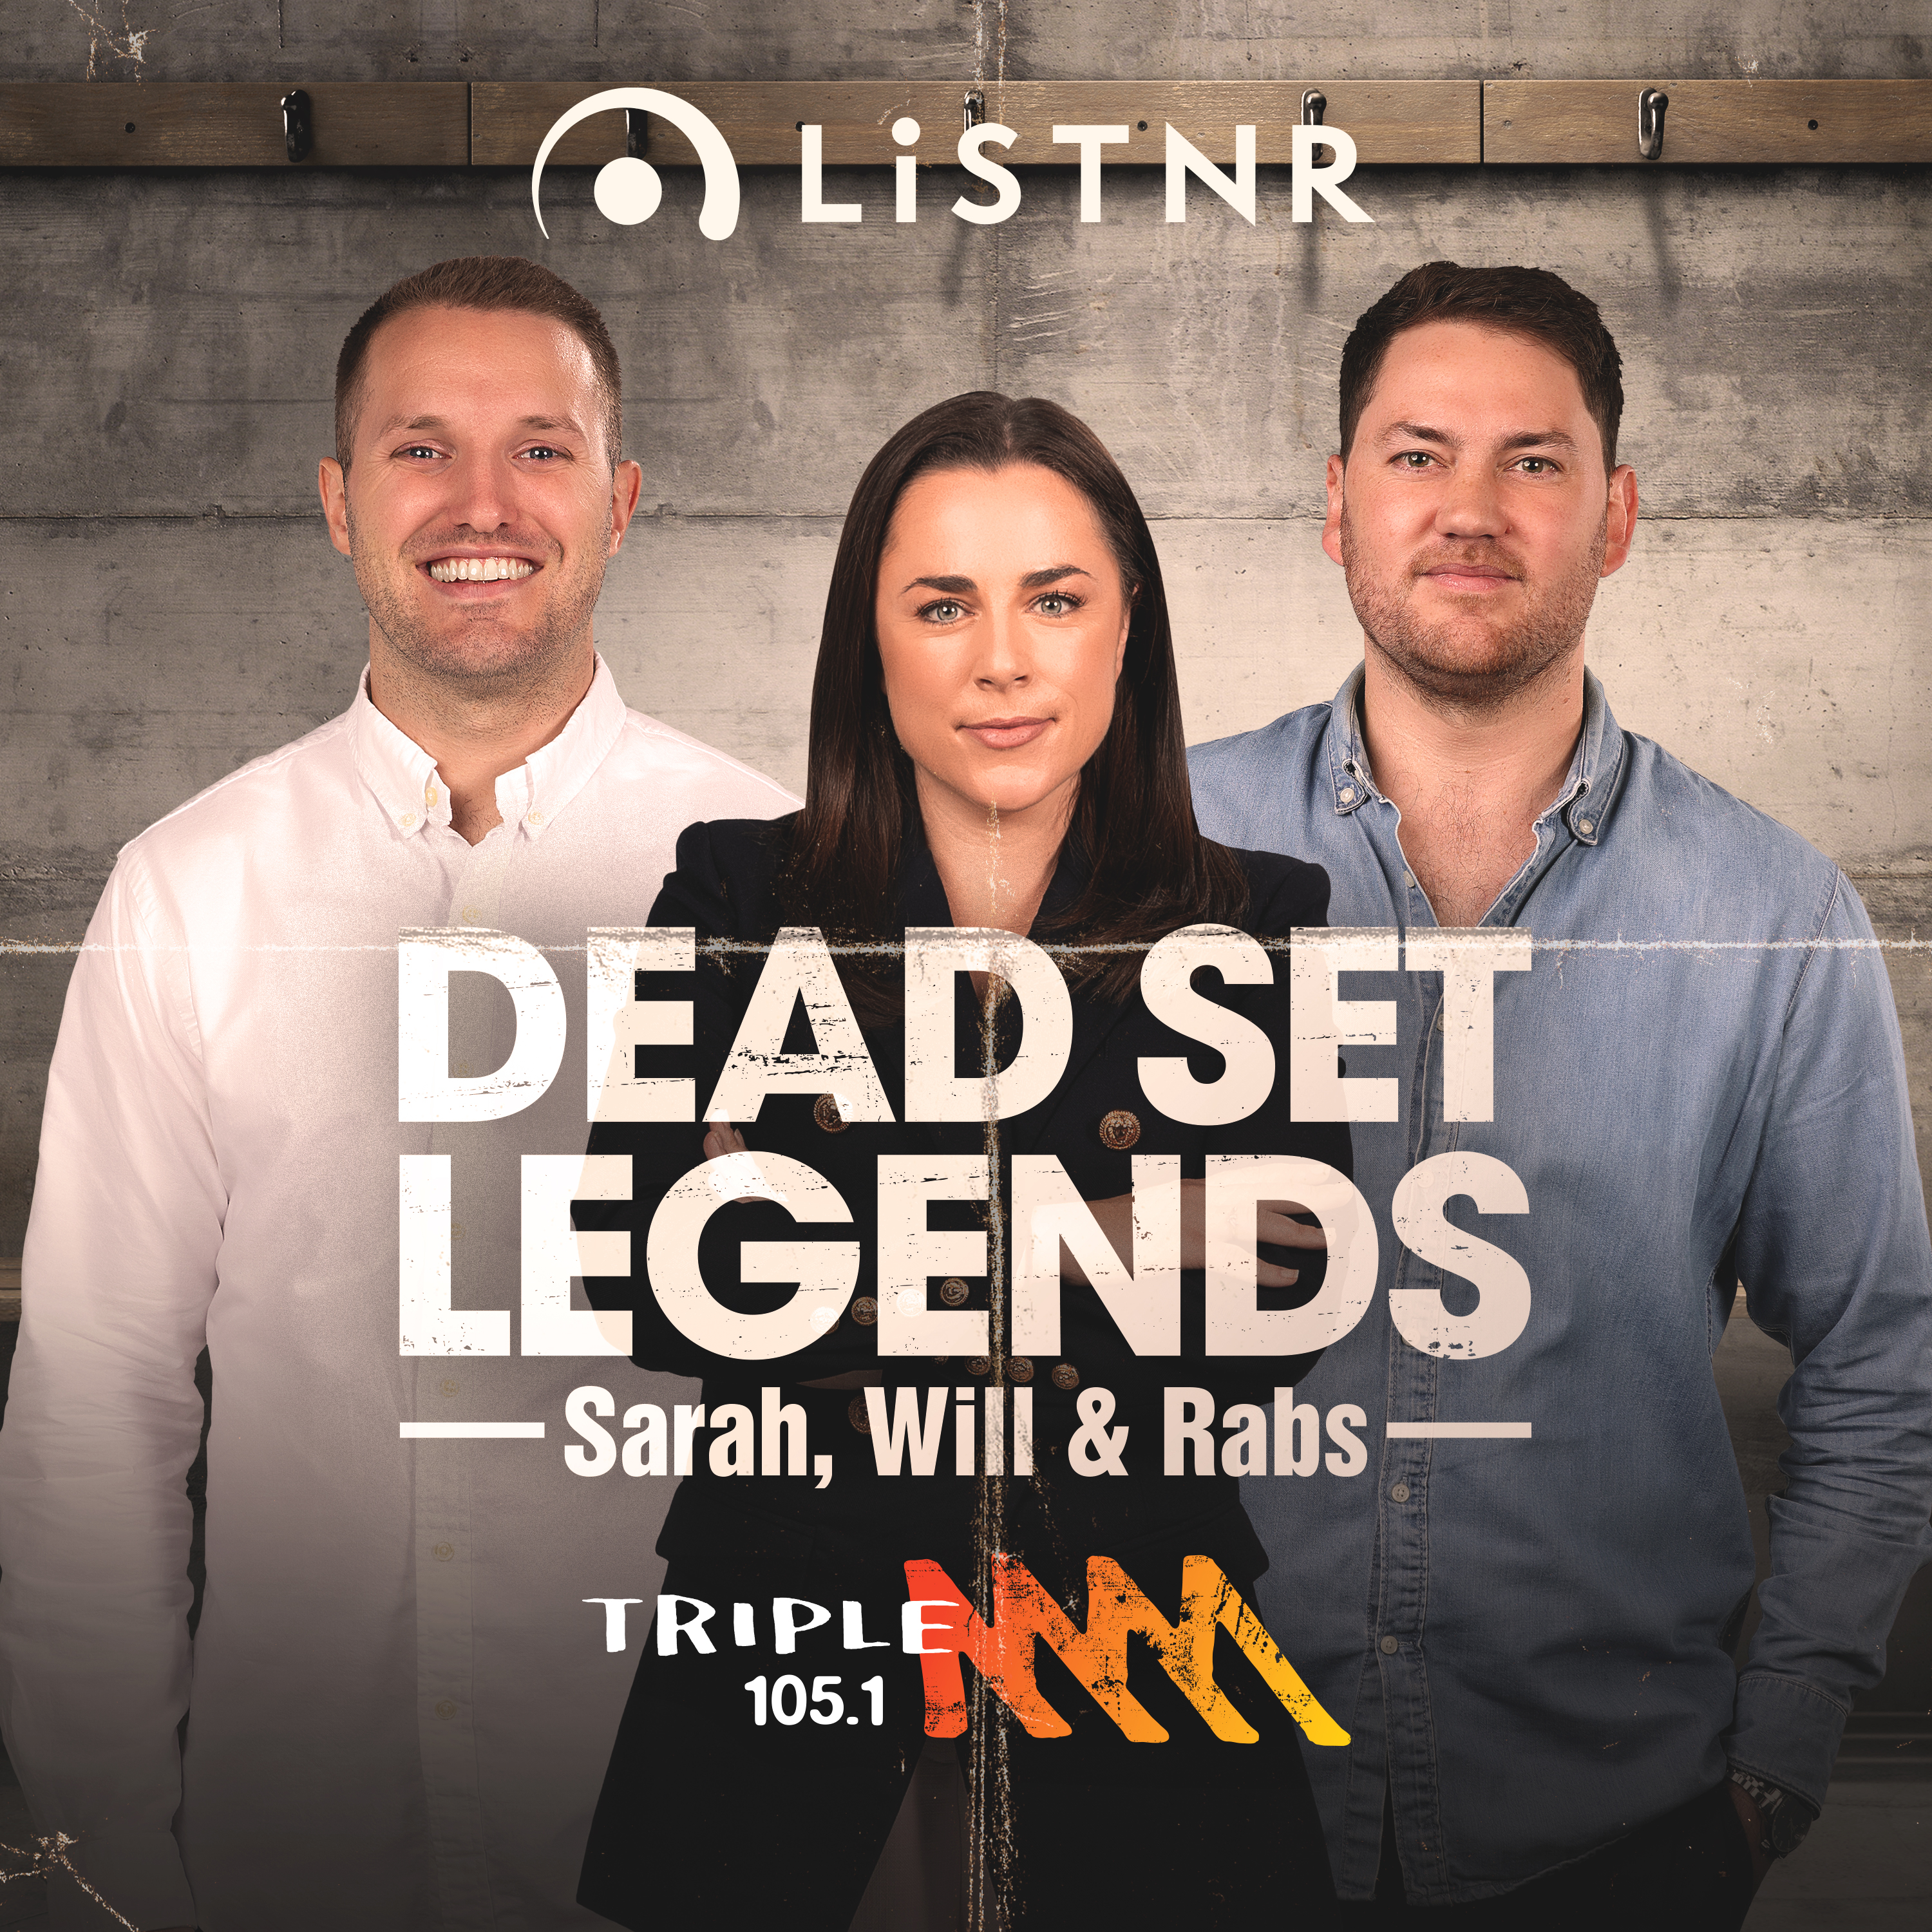 Kerry O'Keeffe on Dead Set Legends Melbourne - 14th July